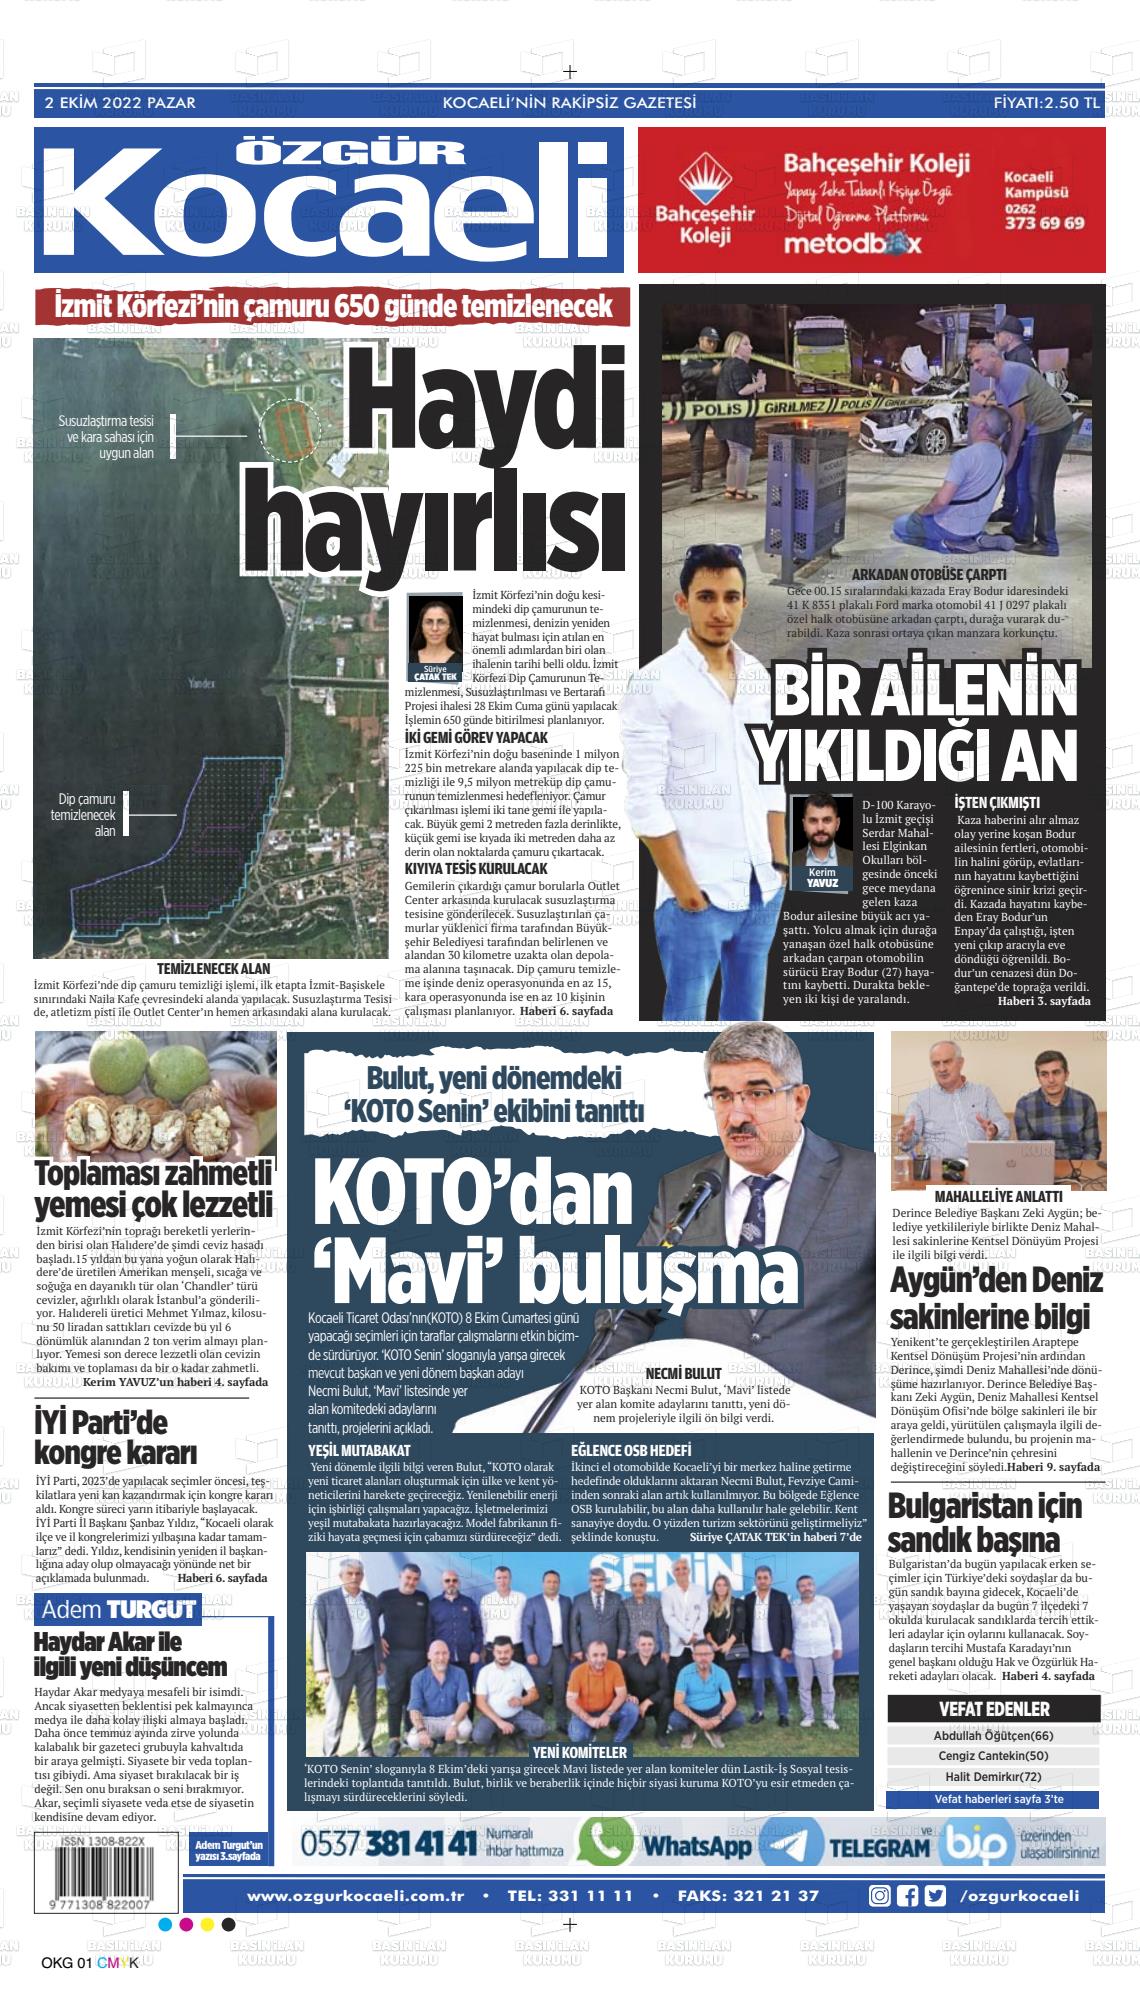 02 Ekim 2022 Özgür Kocaeli Gazete Manşeti